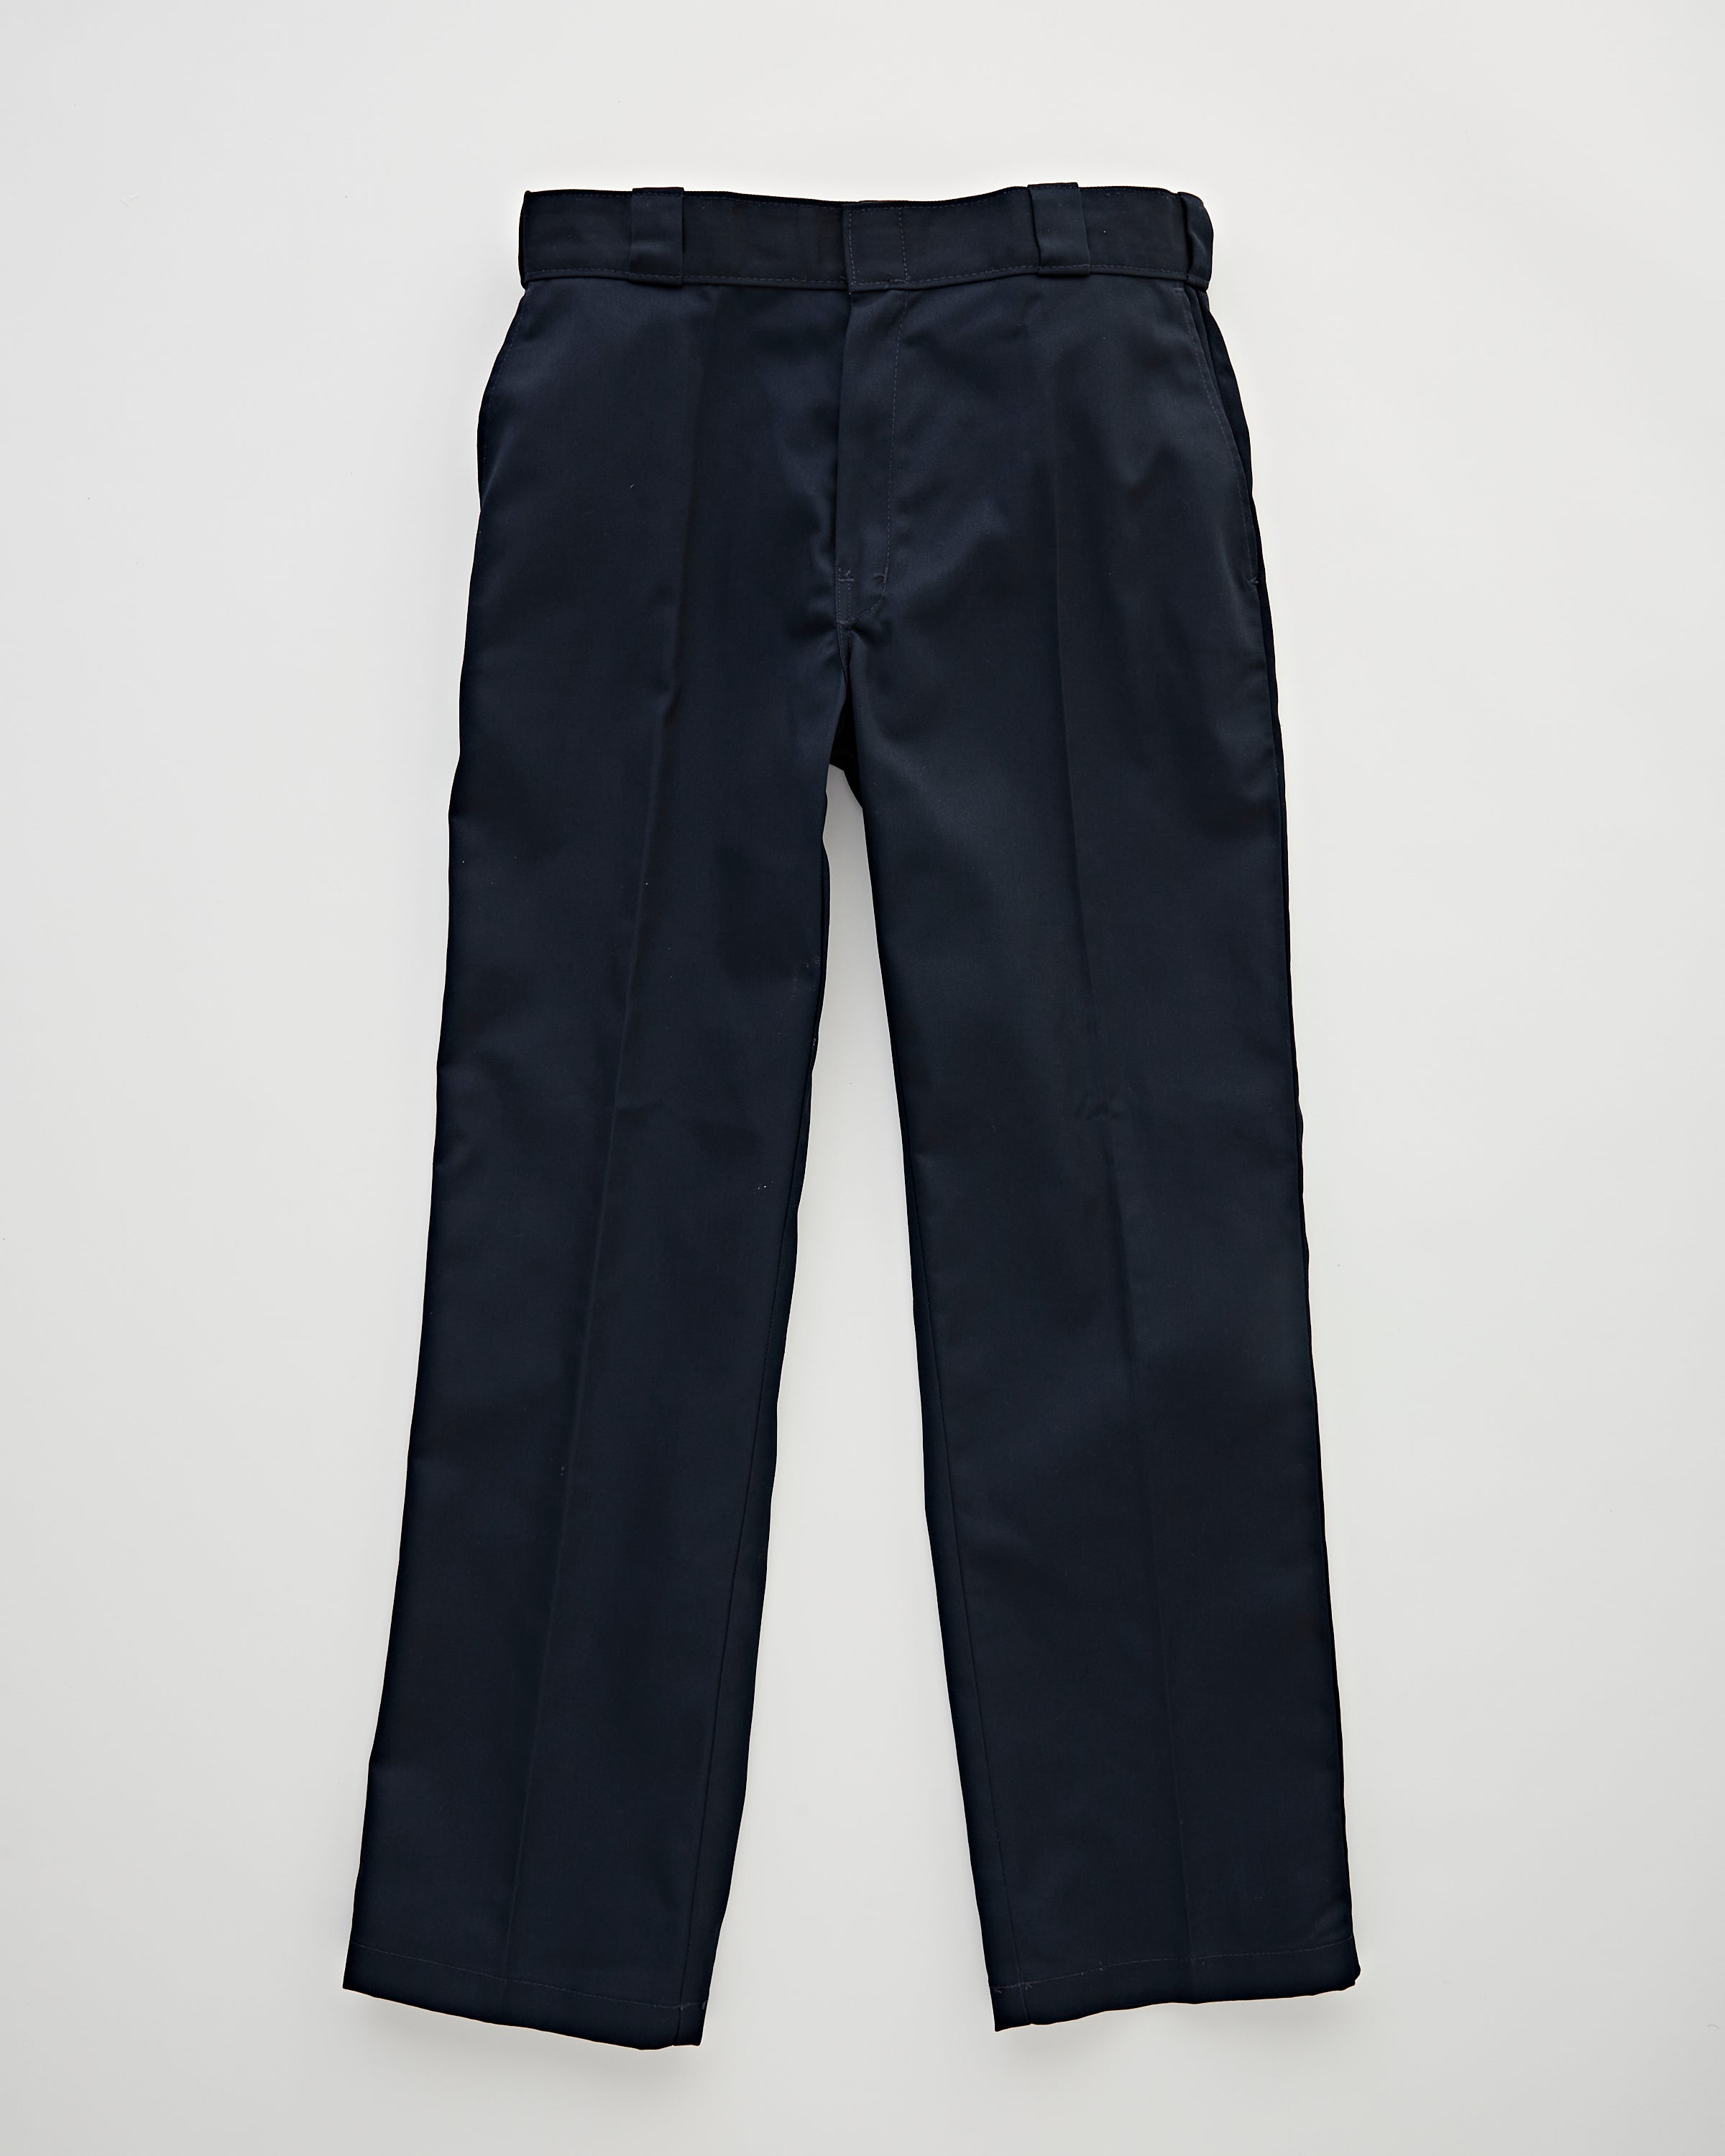 Dickies 874 WORK PANT REC - Trousers - dark navy/dark blue - Zalando.de